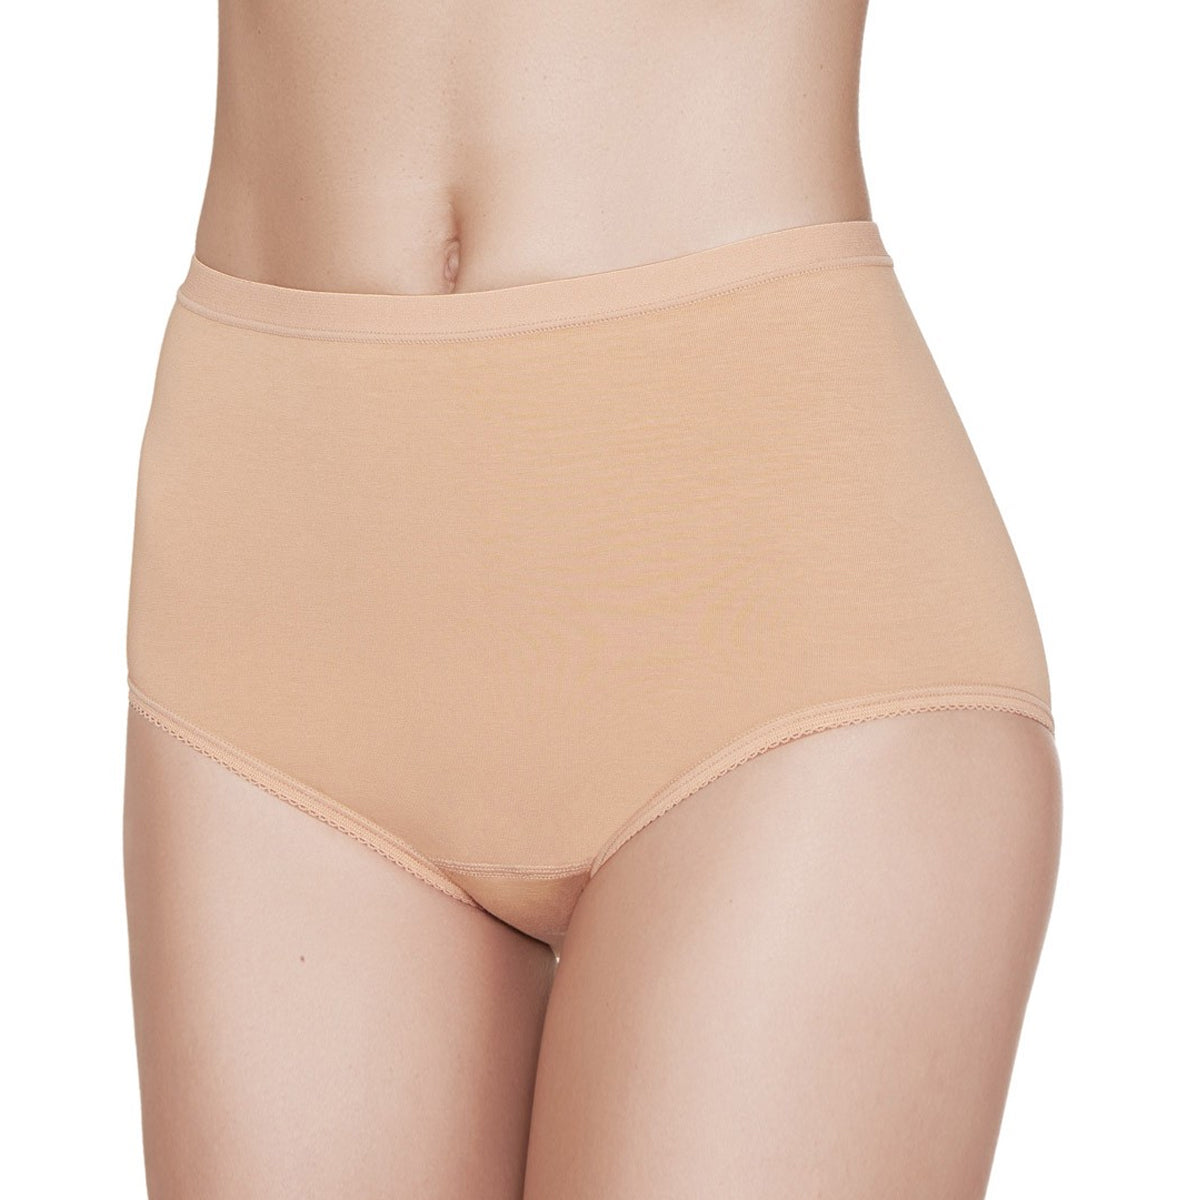 Janira Maxi Queen full Brief panty in nude dune beige underwear 31643 braga queen multi pack lingerie canada linea intima